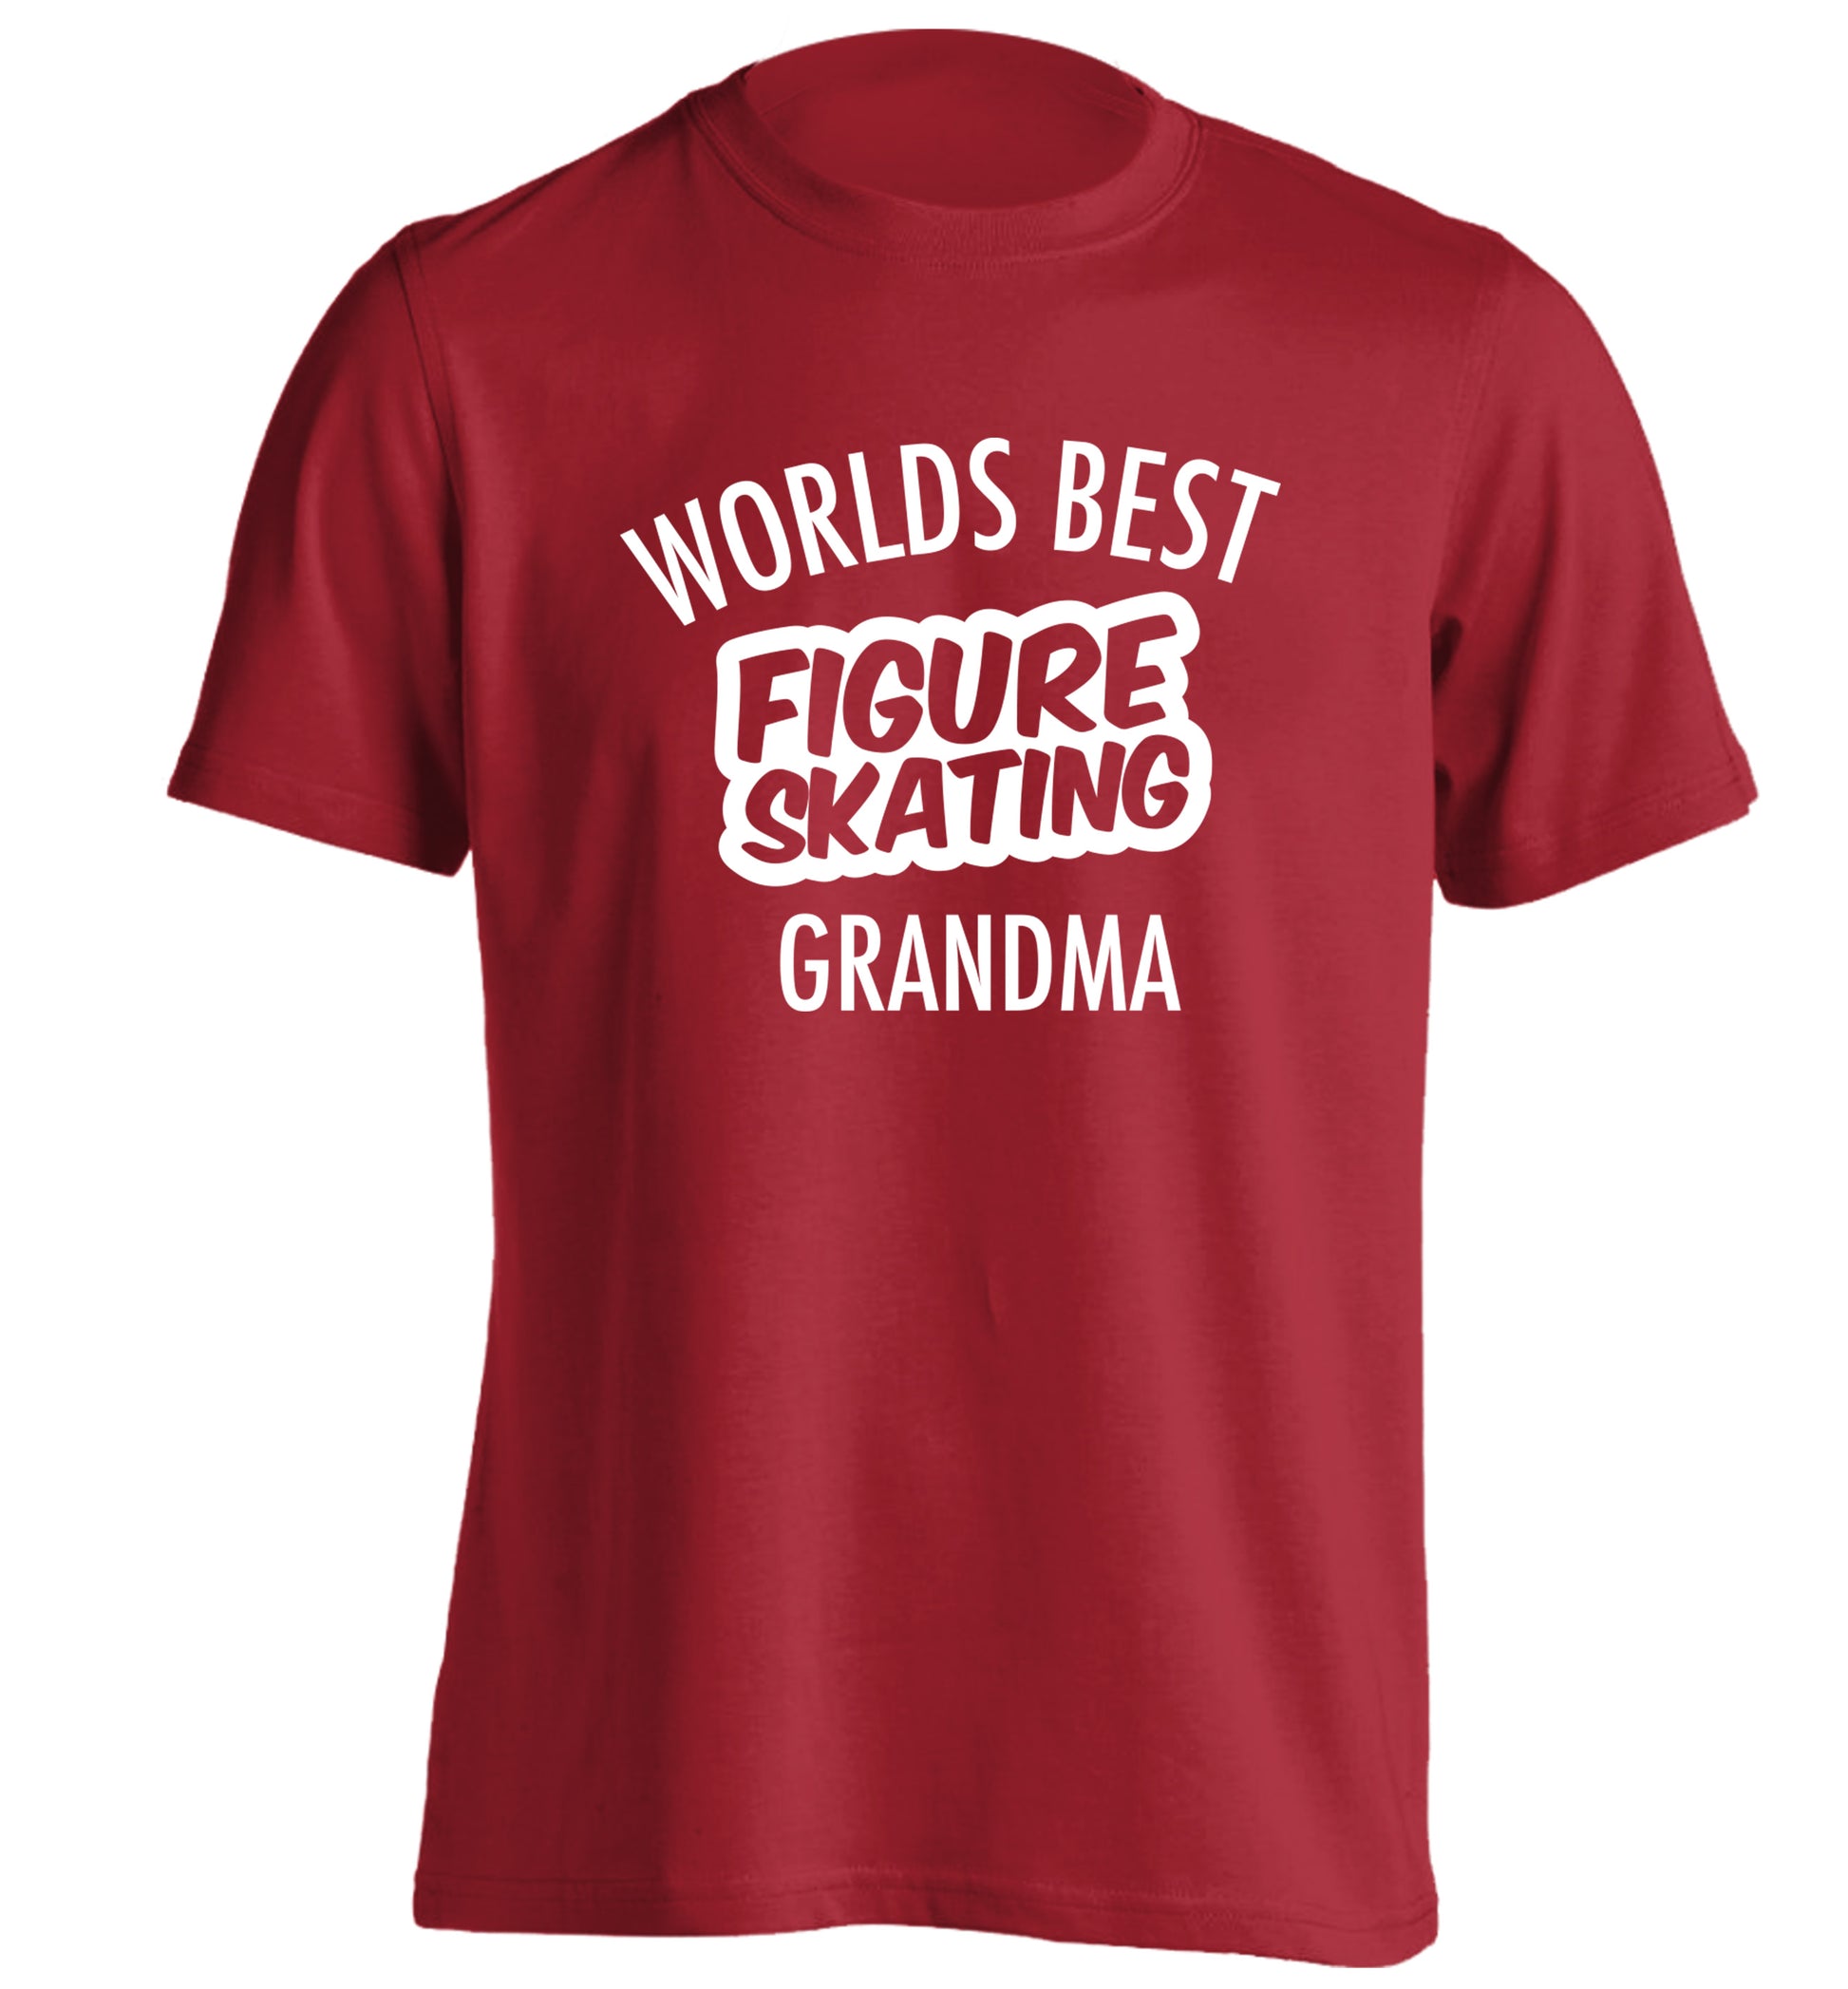 Worlds best figure skating grandma adults unisexred Tshirt 2XL